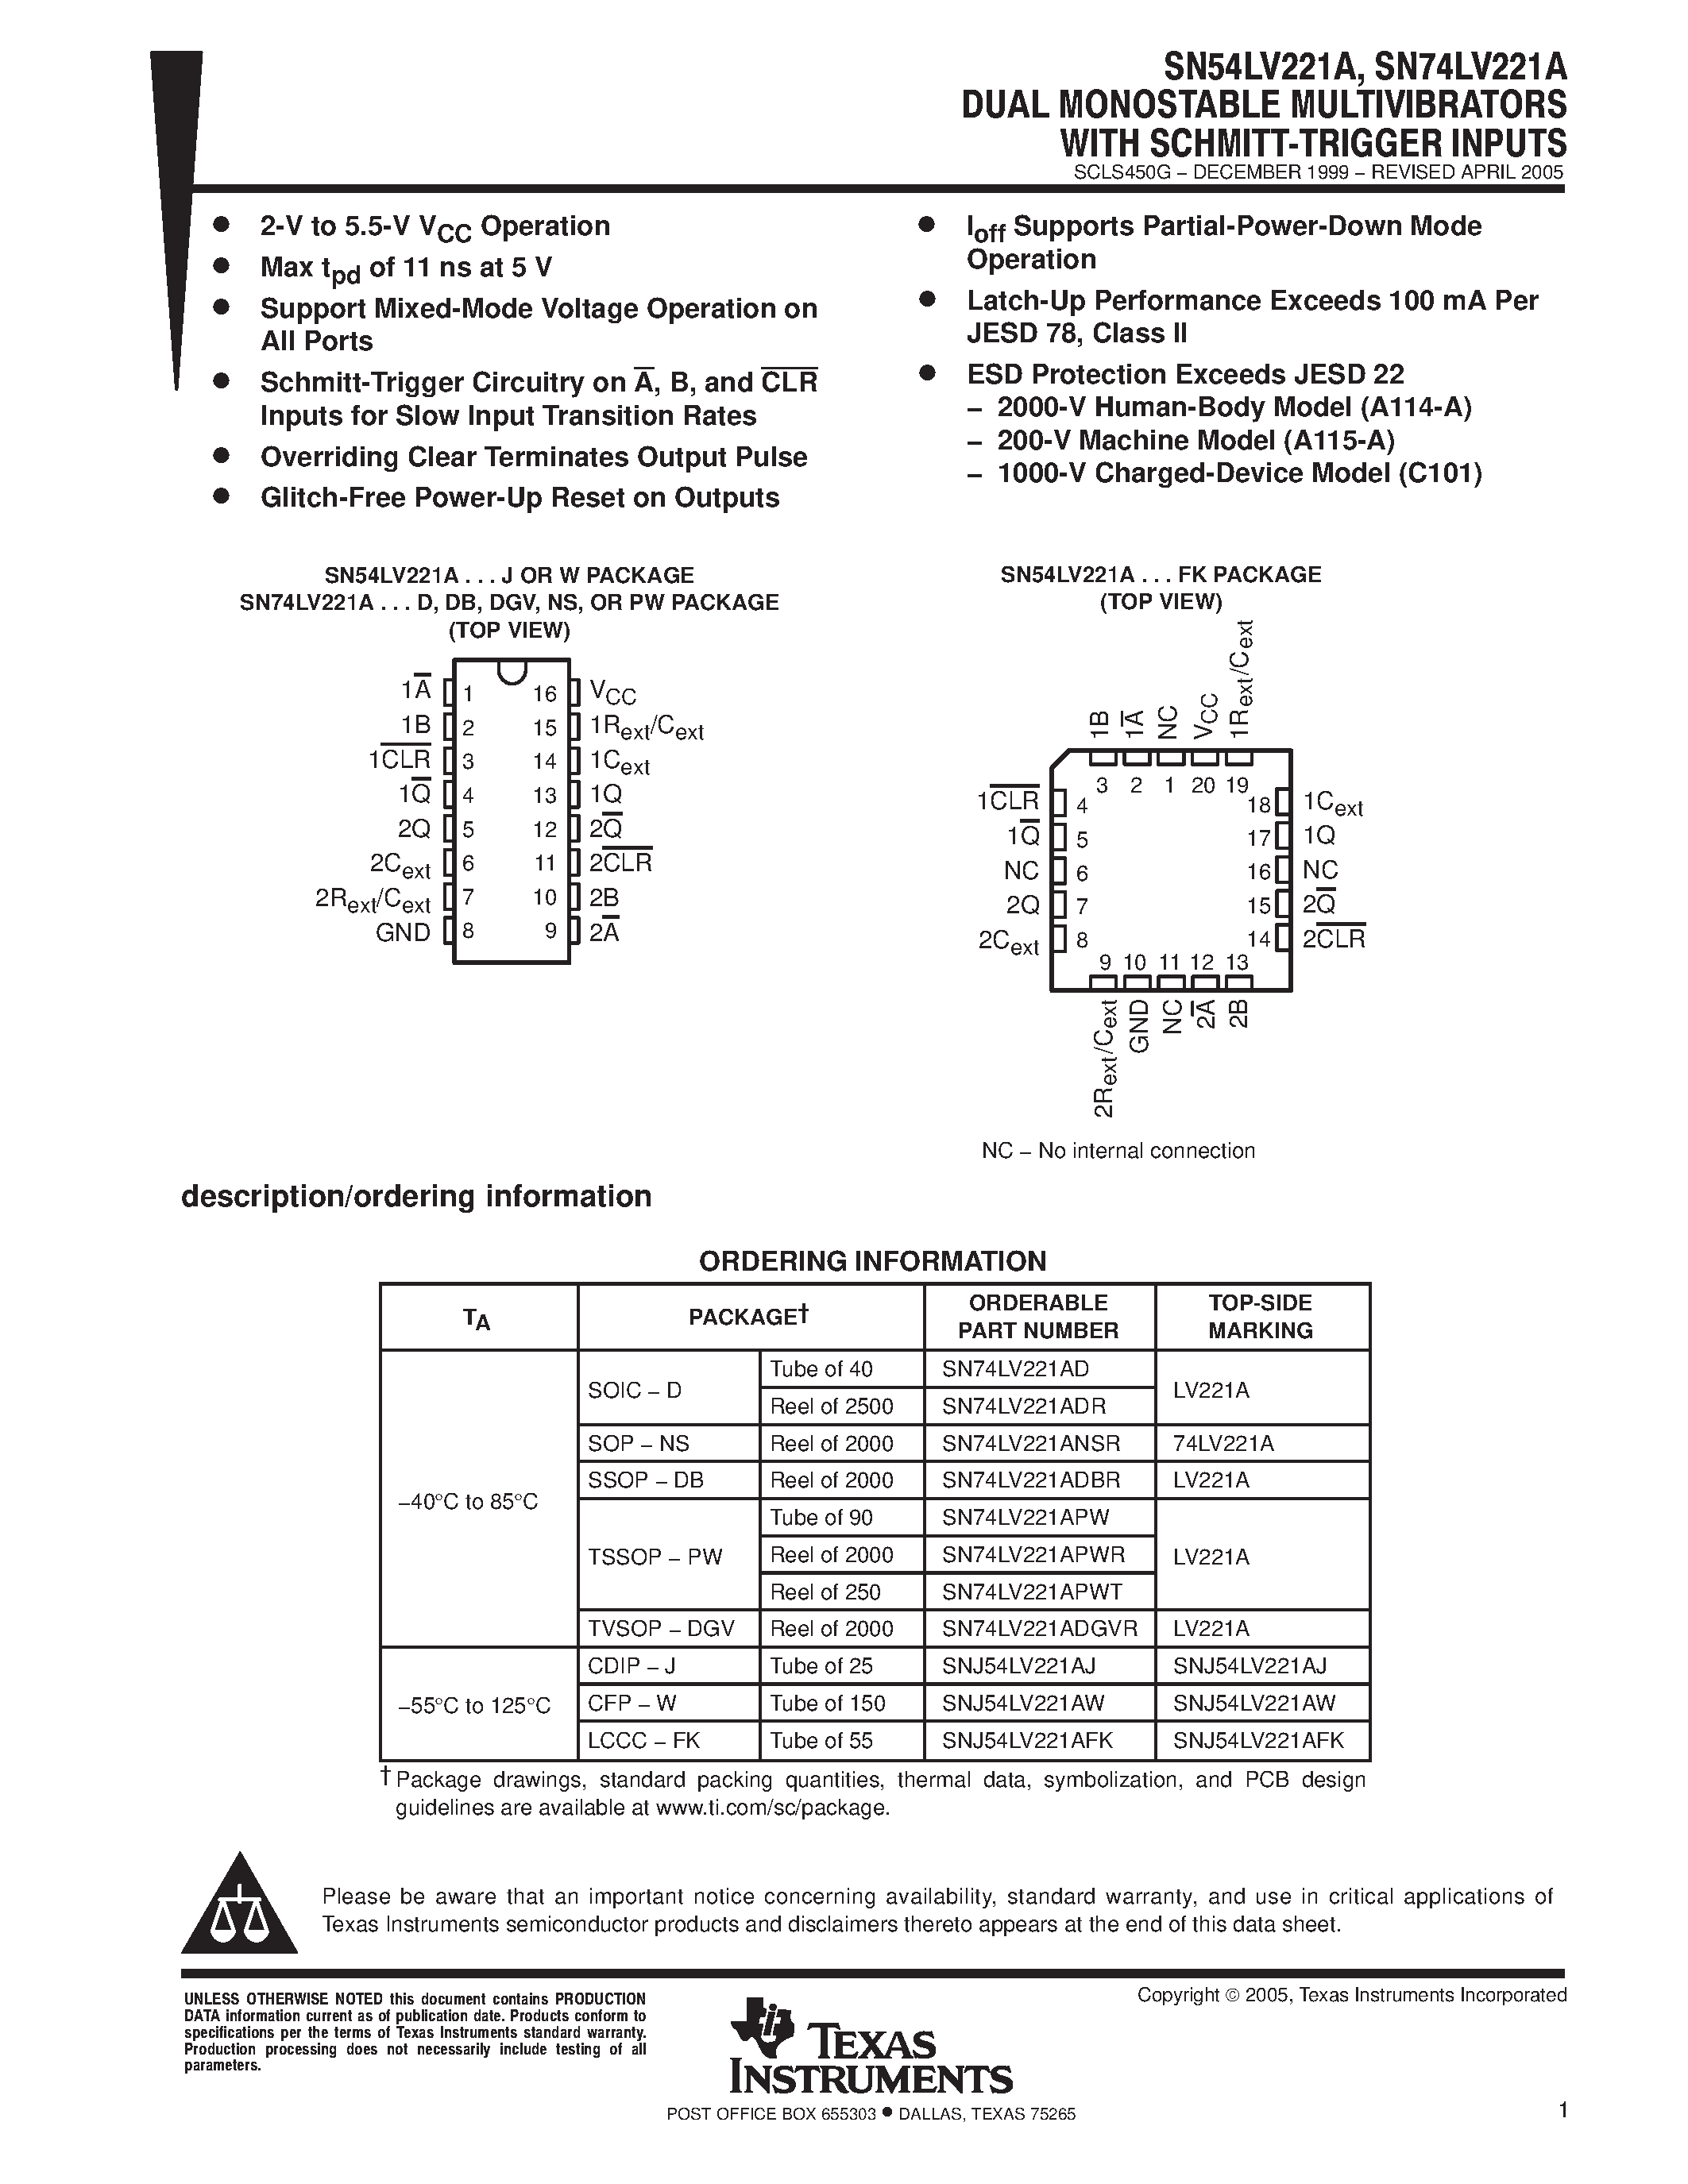 Datasheet 74LV221 - DUAL MONOSTABLE MULTIVIBRATORS WITH SCHMITT TRIGGER INPUTS page 1